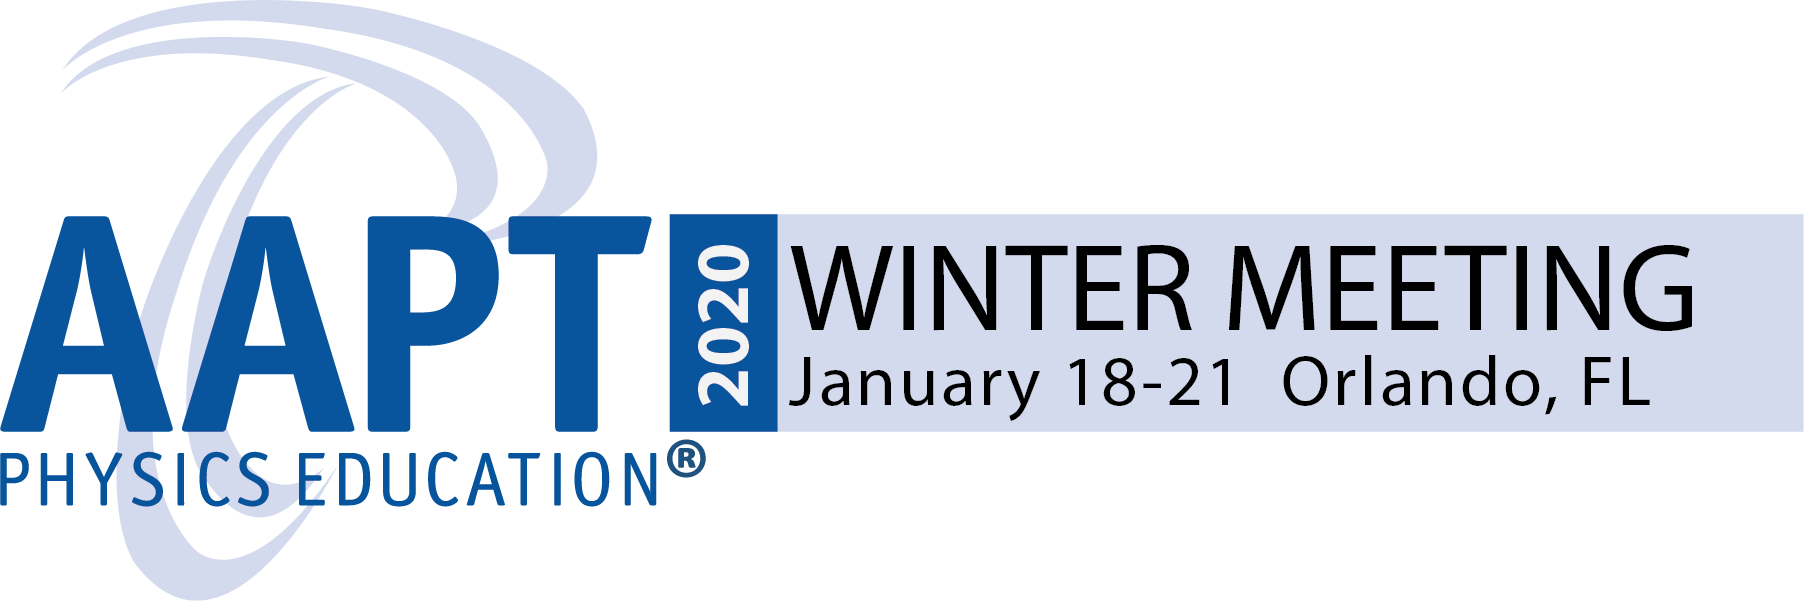 AAPT Winter Meeting 2020 in Orlando, FL